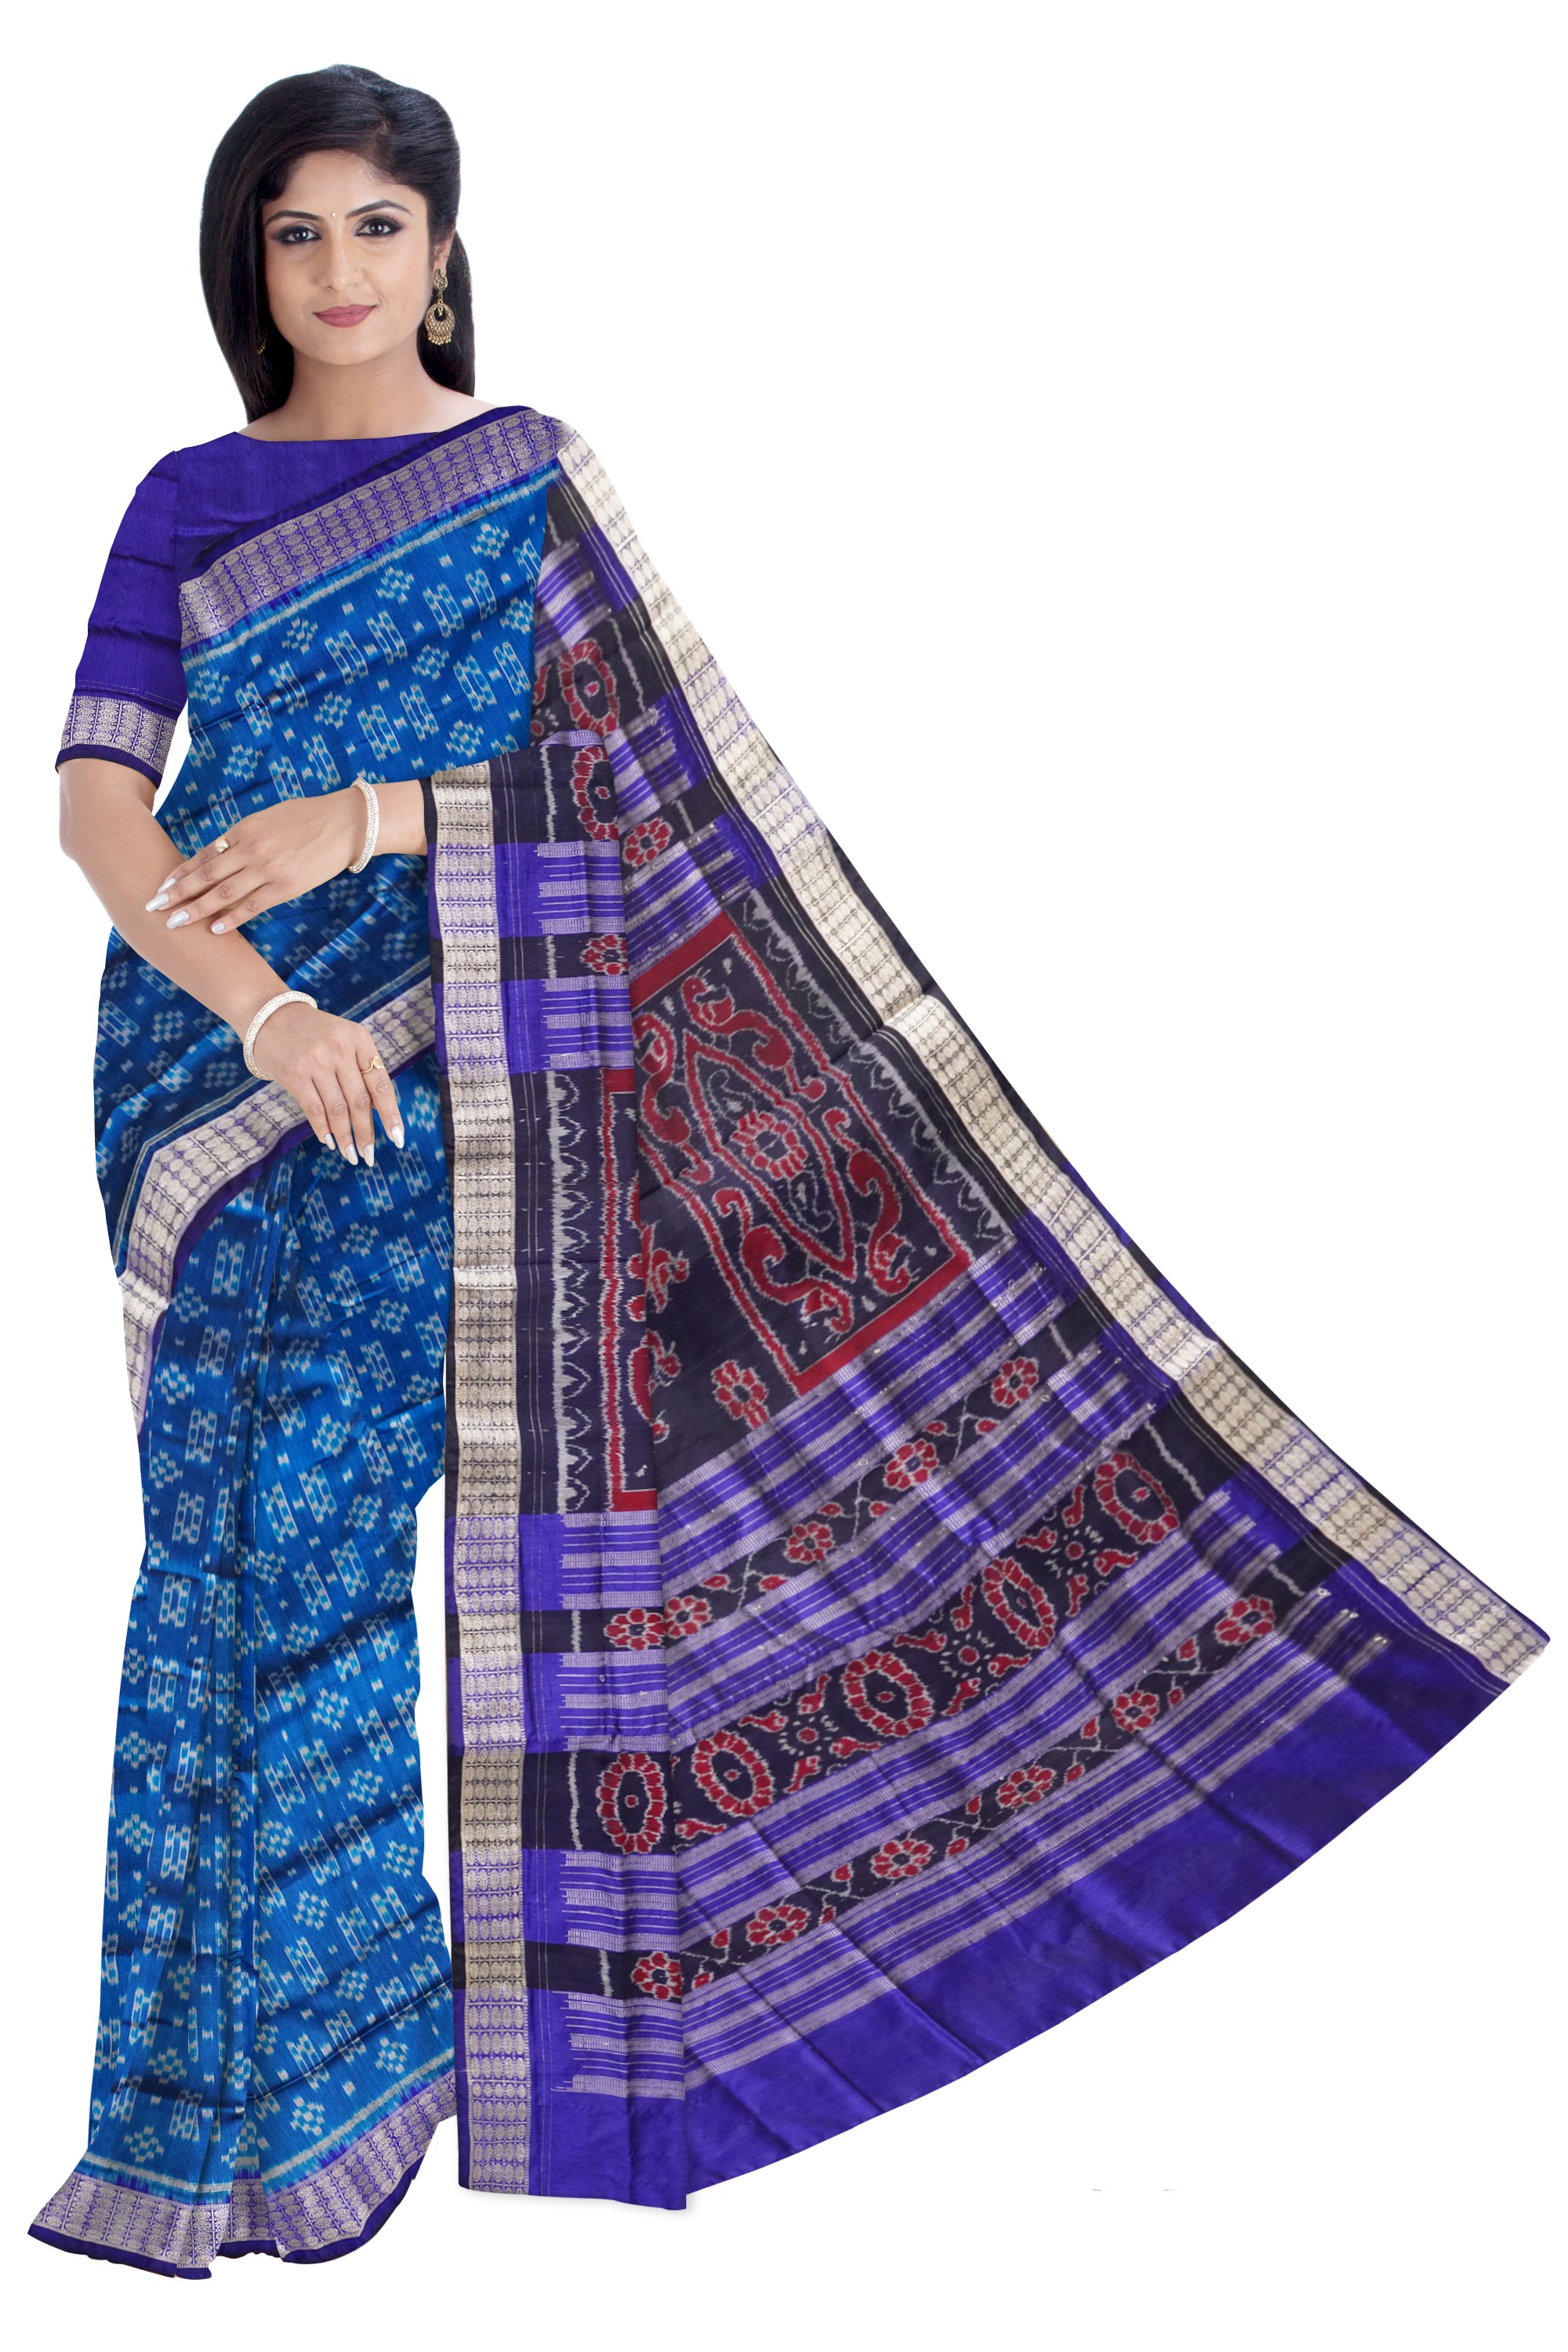 Sky blue and purple pasapali pattern Sambalpuri pata saree, adorned with peacock and flowers pallu, perfect for all occasions. - Koshali Arts & Crafts Enterprise